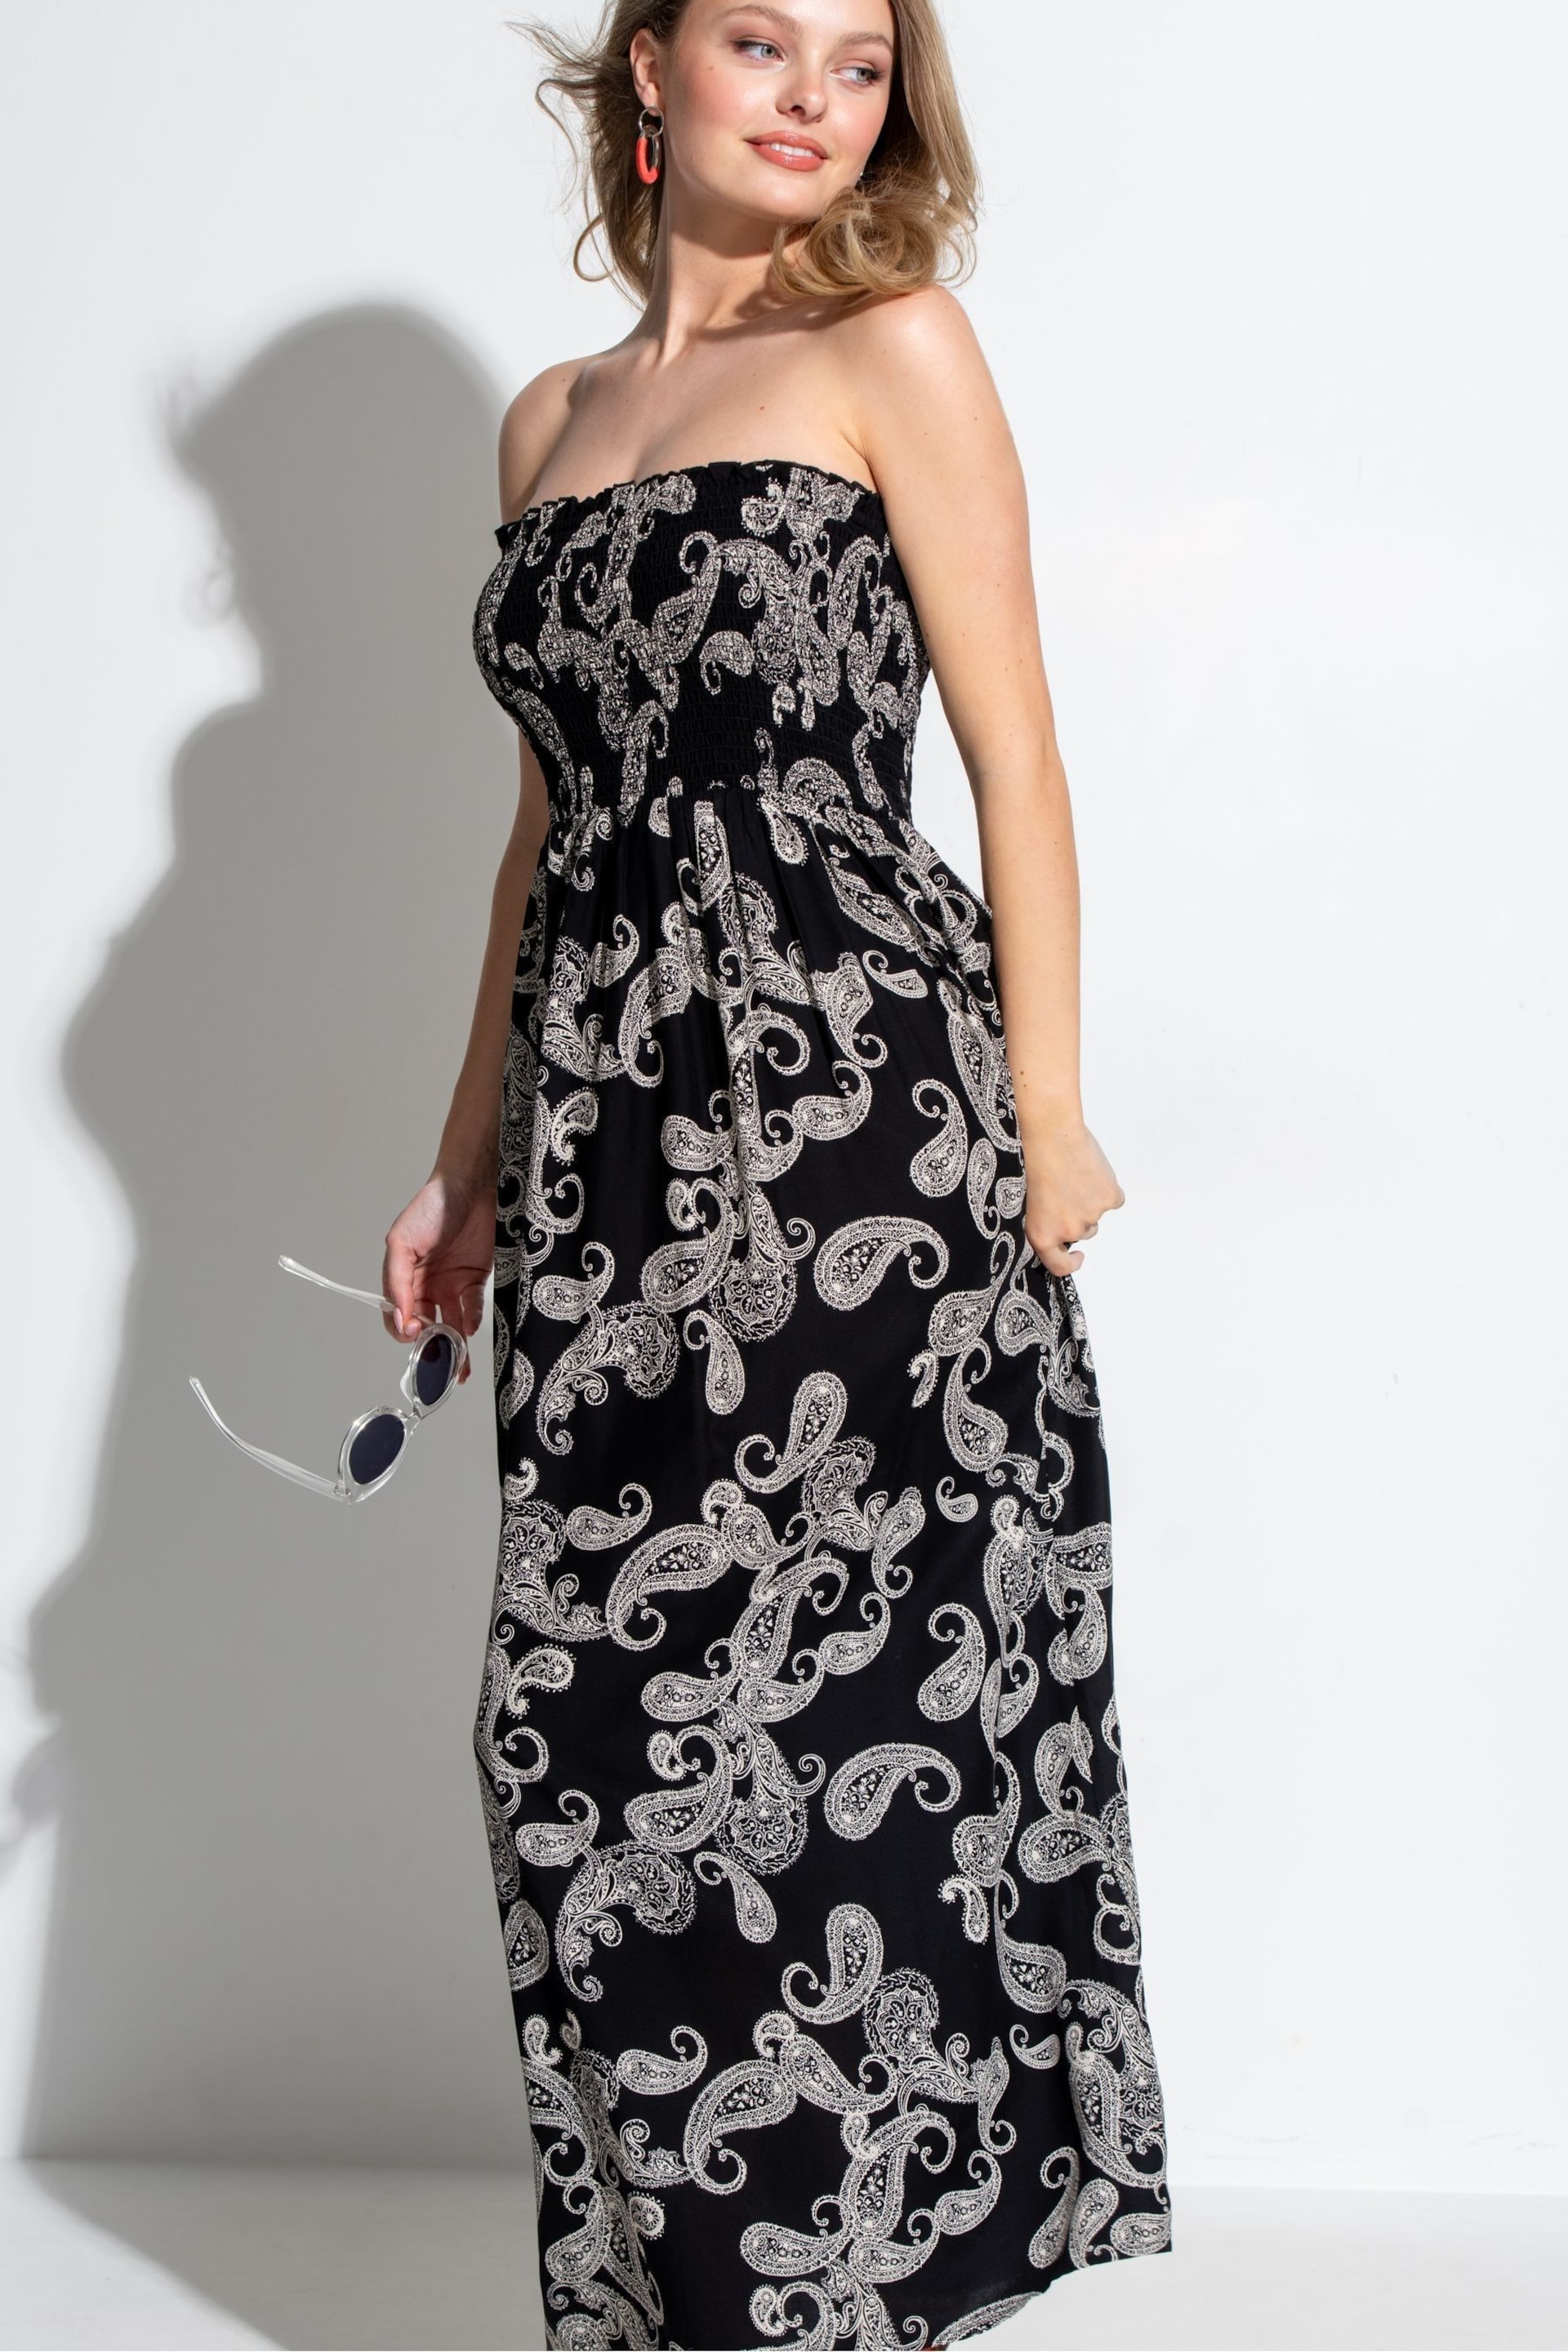 Pour Moi Black Paisley Strapless Shirred Bodice Maxi Beach Dress - Image 2 of 4